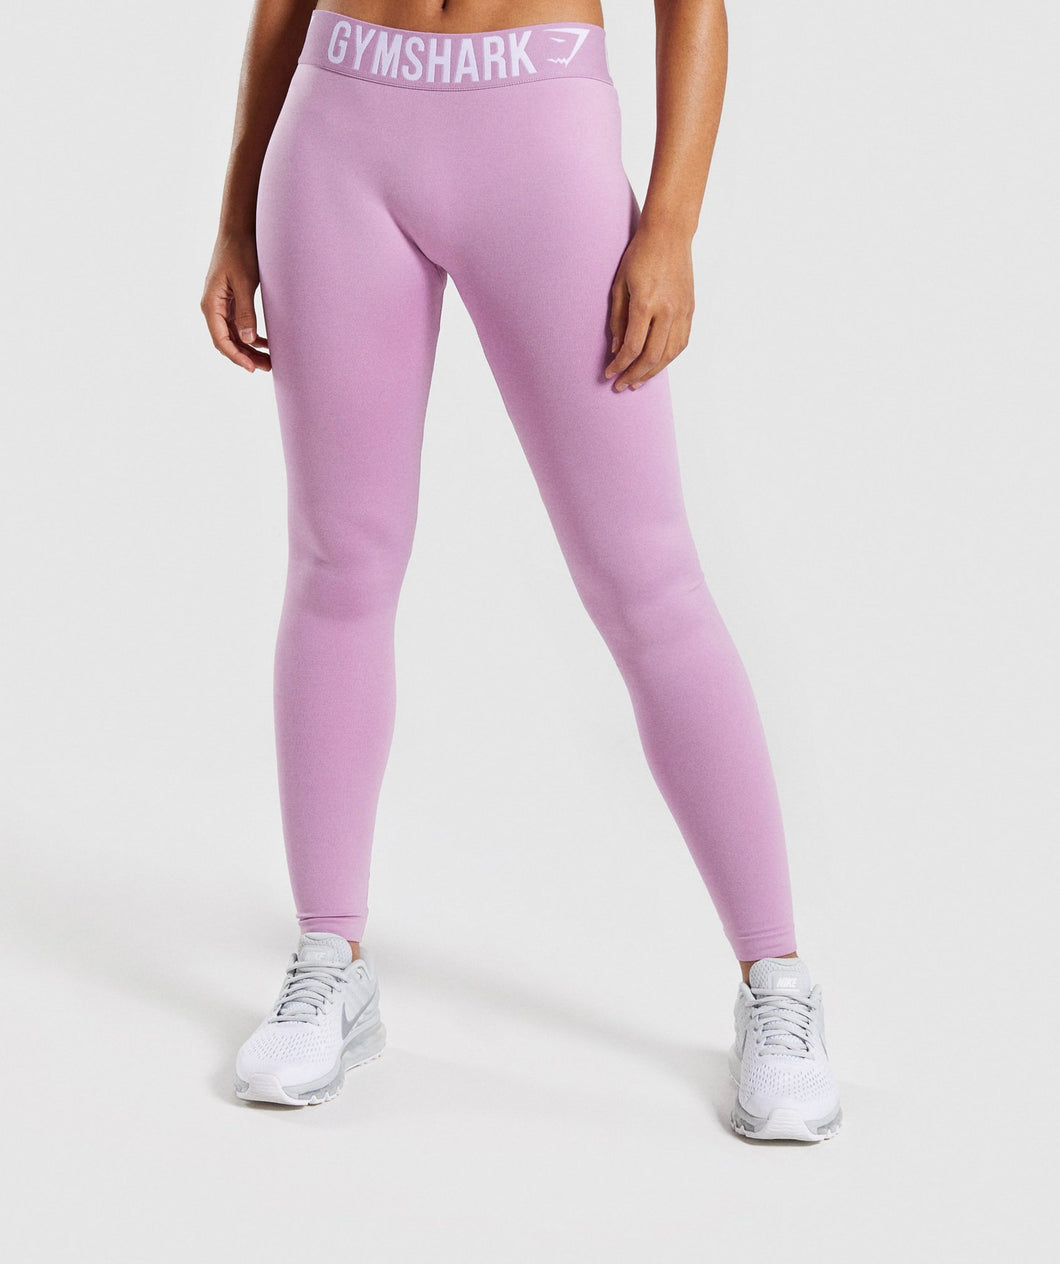 Gymshark Fit Leggings - Pink 